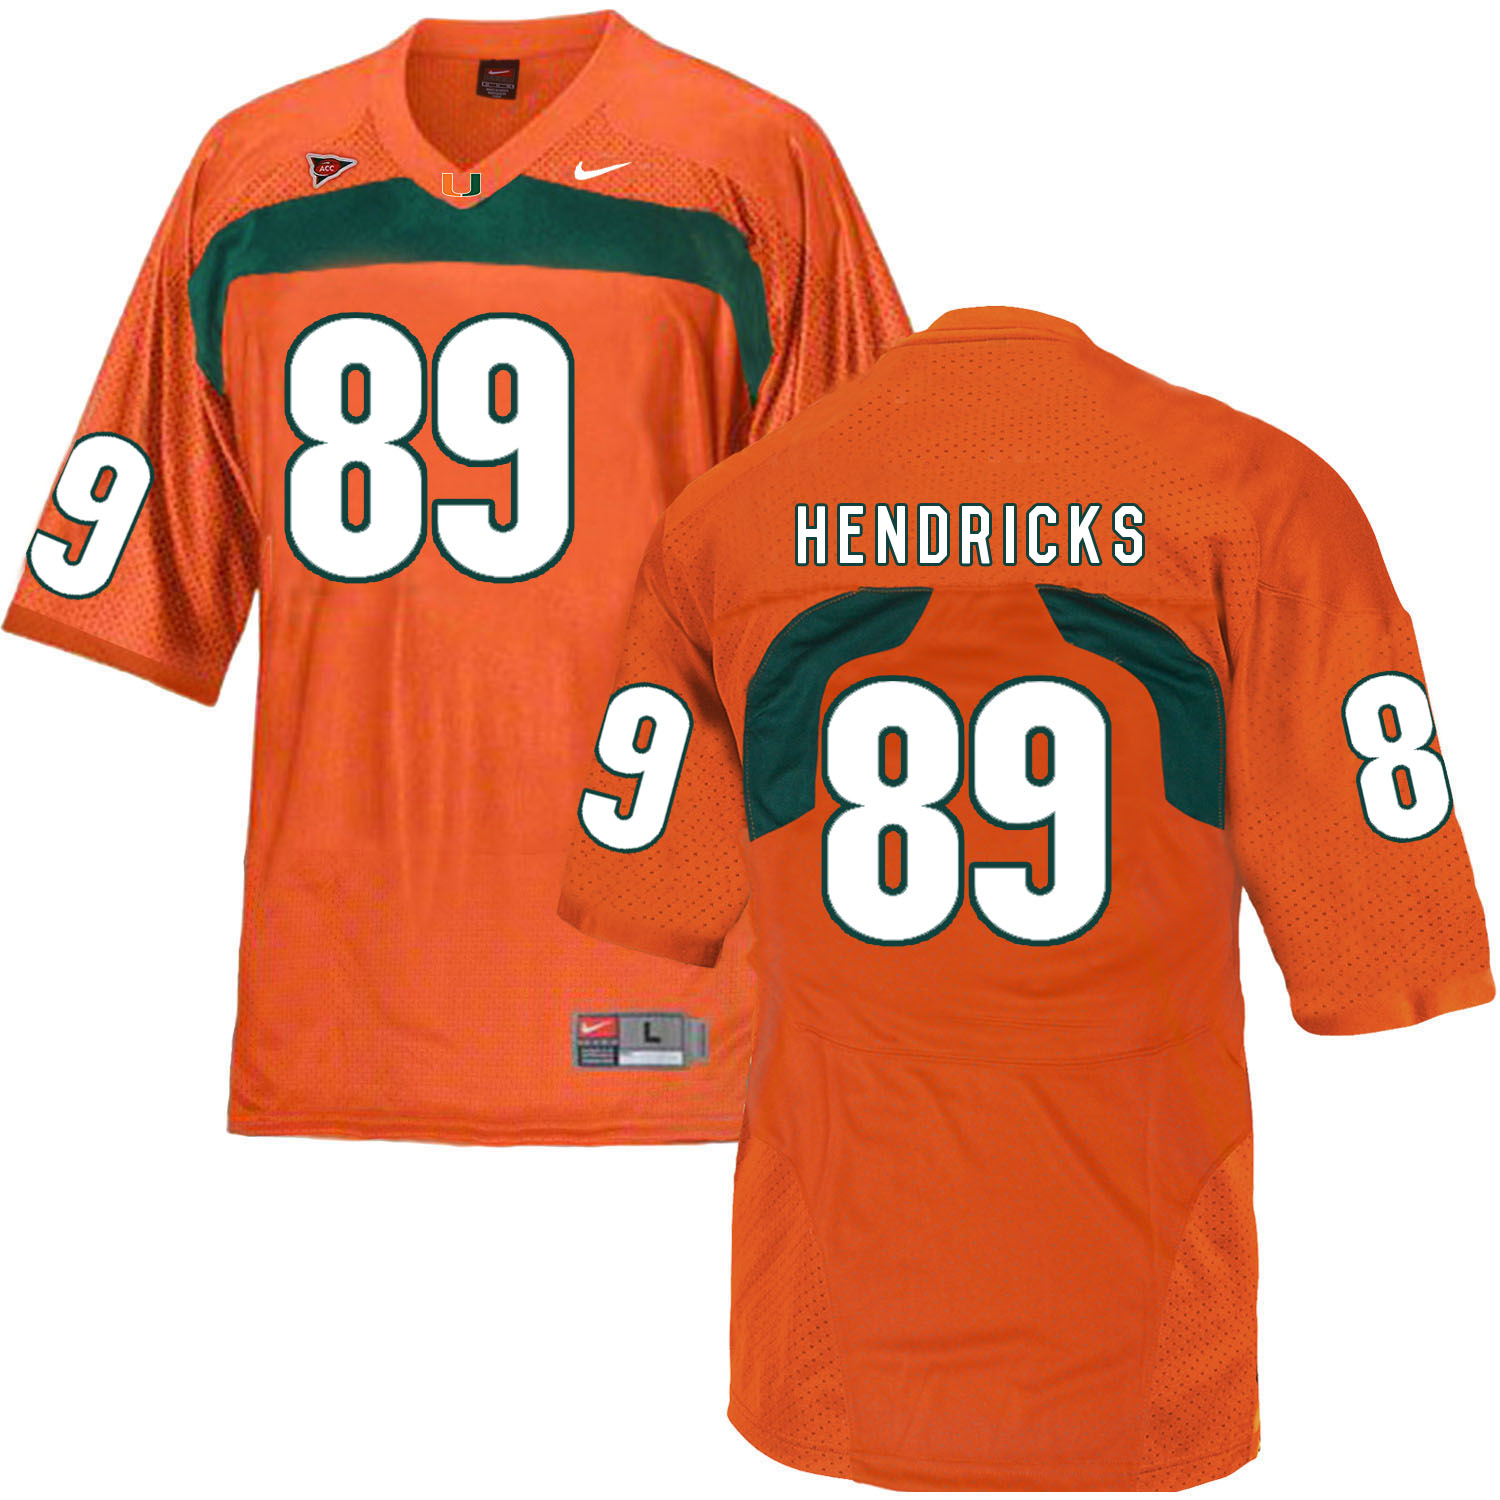 Miami Hurricanes 89 Hendricks Orange College Football Jersey